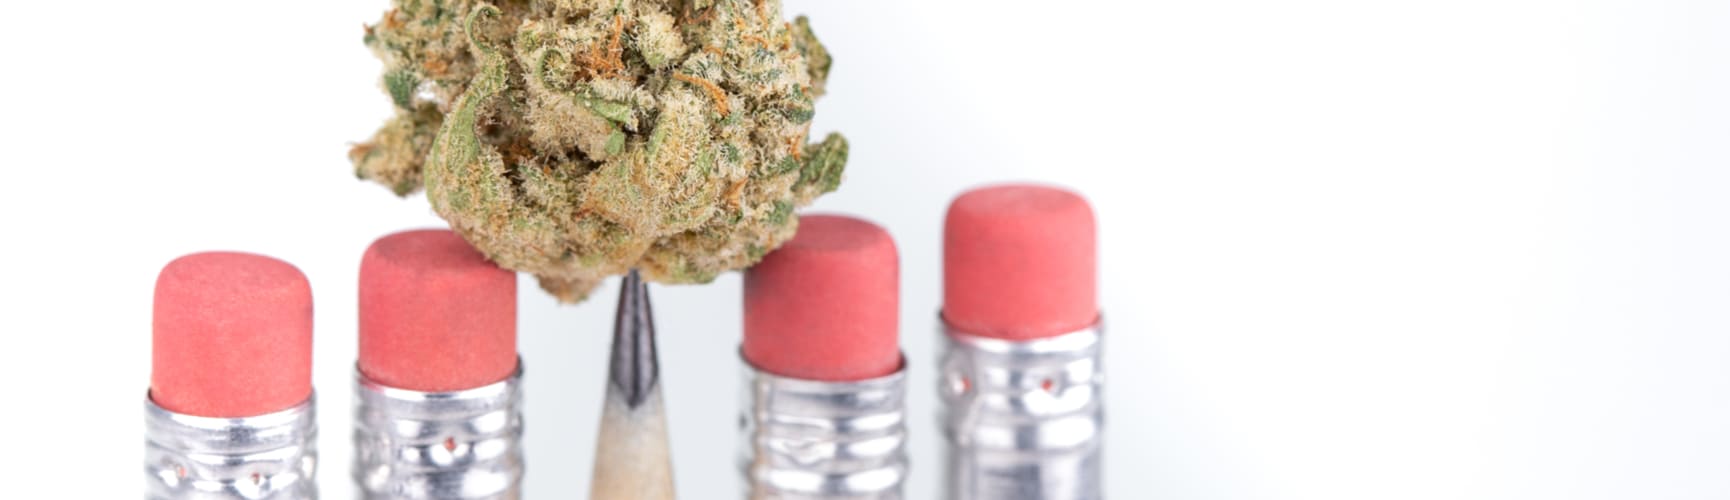 Use Medical Cannabis on School Campus